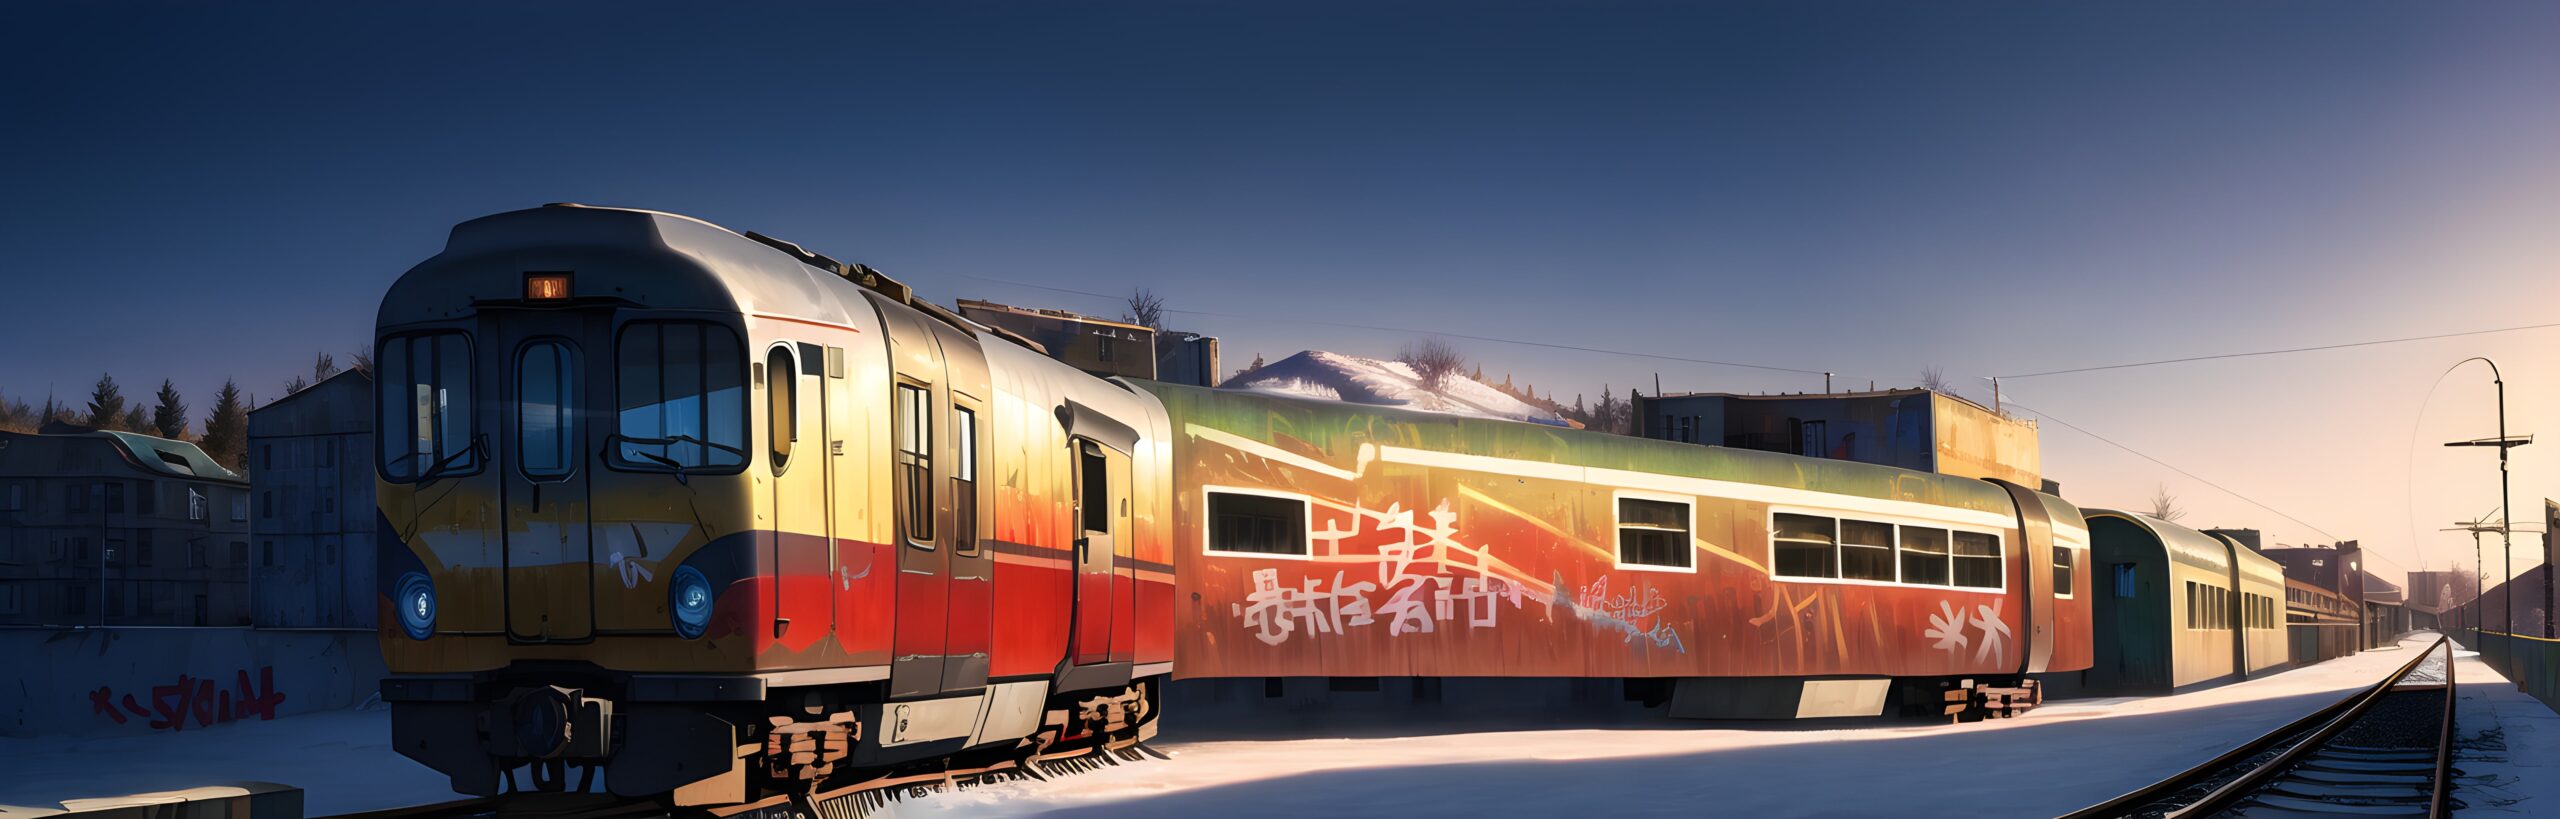 Abandoned Japanese Winter Train